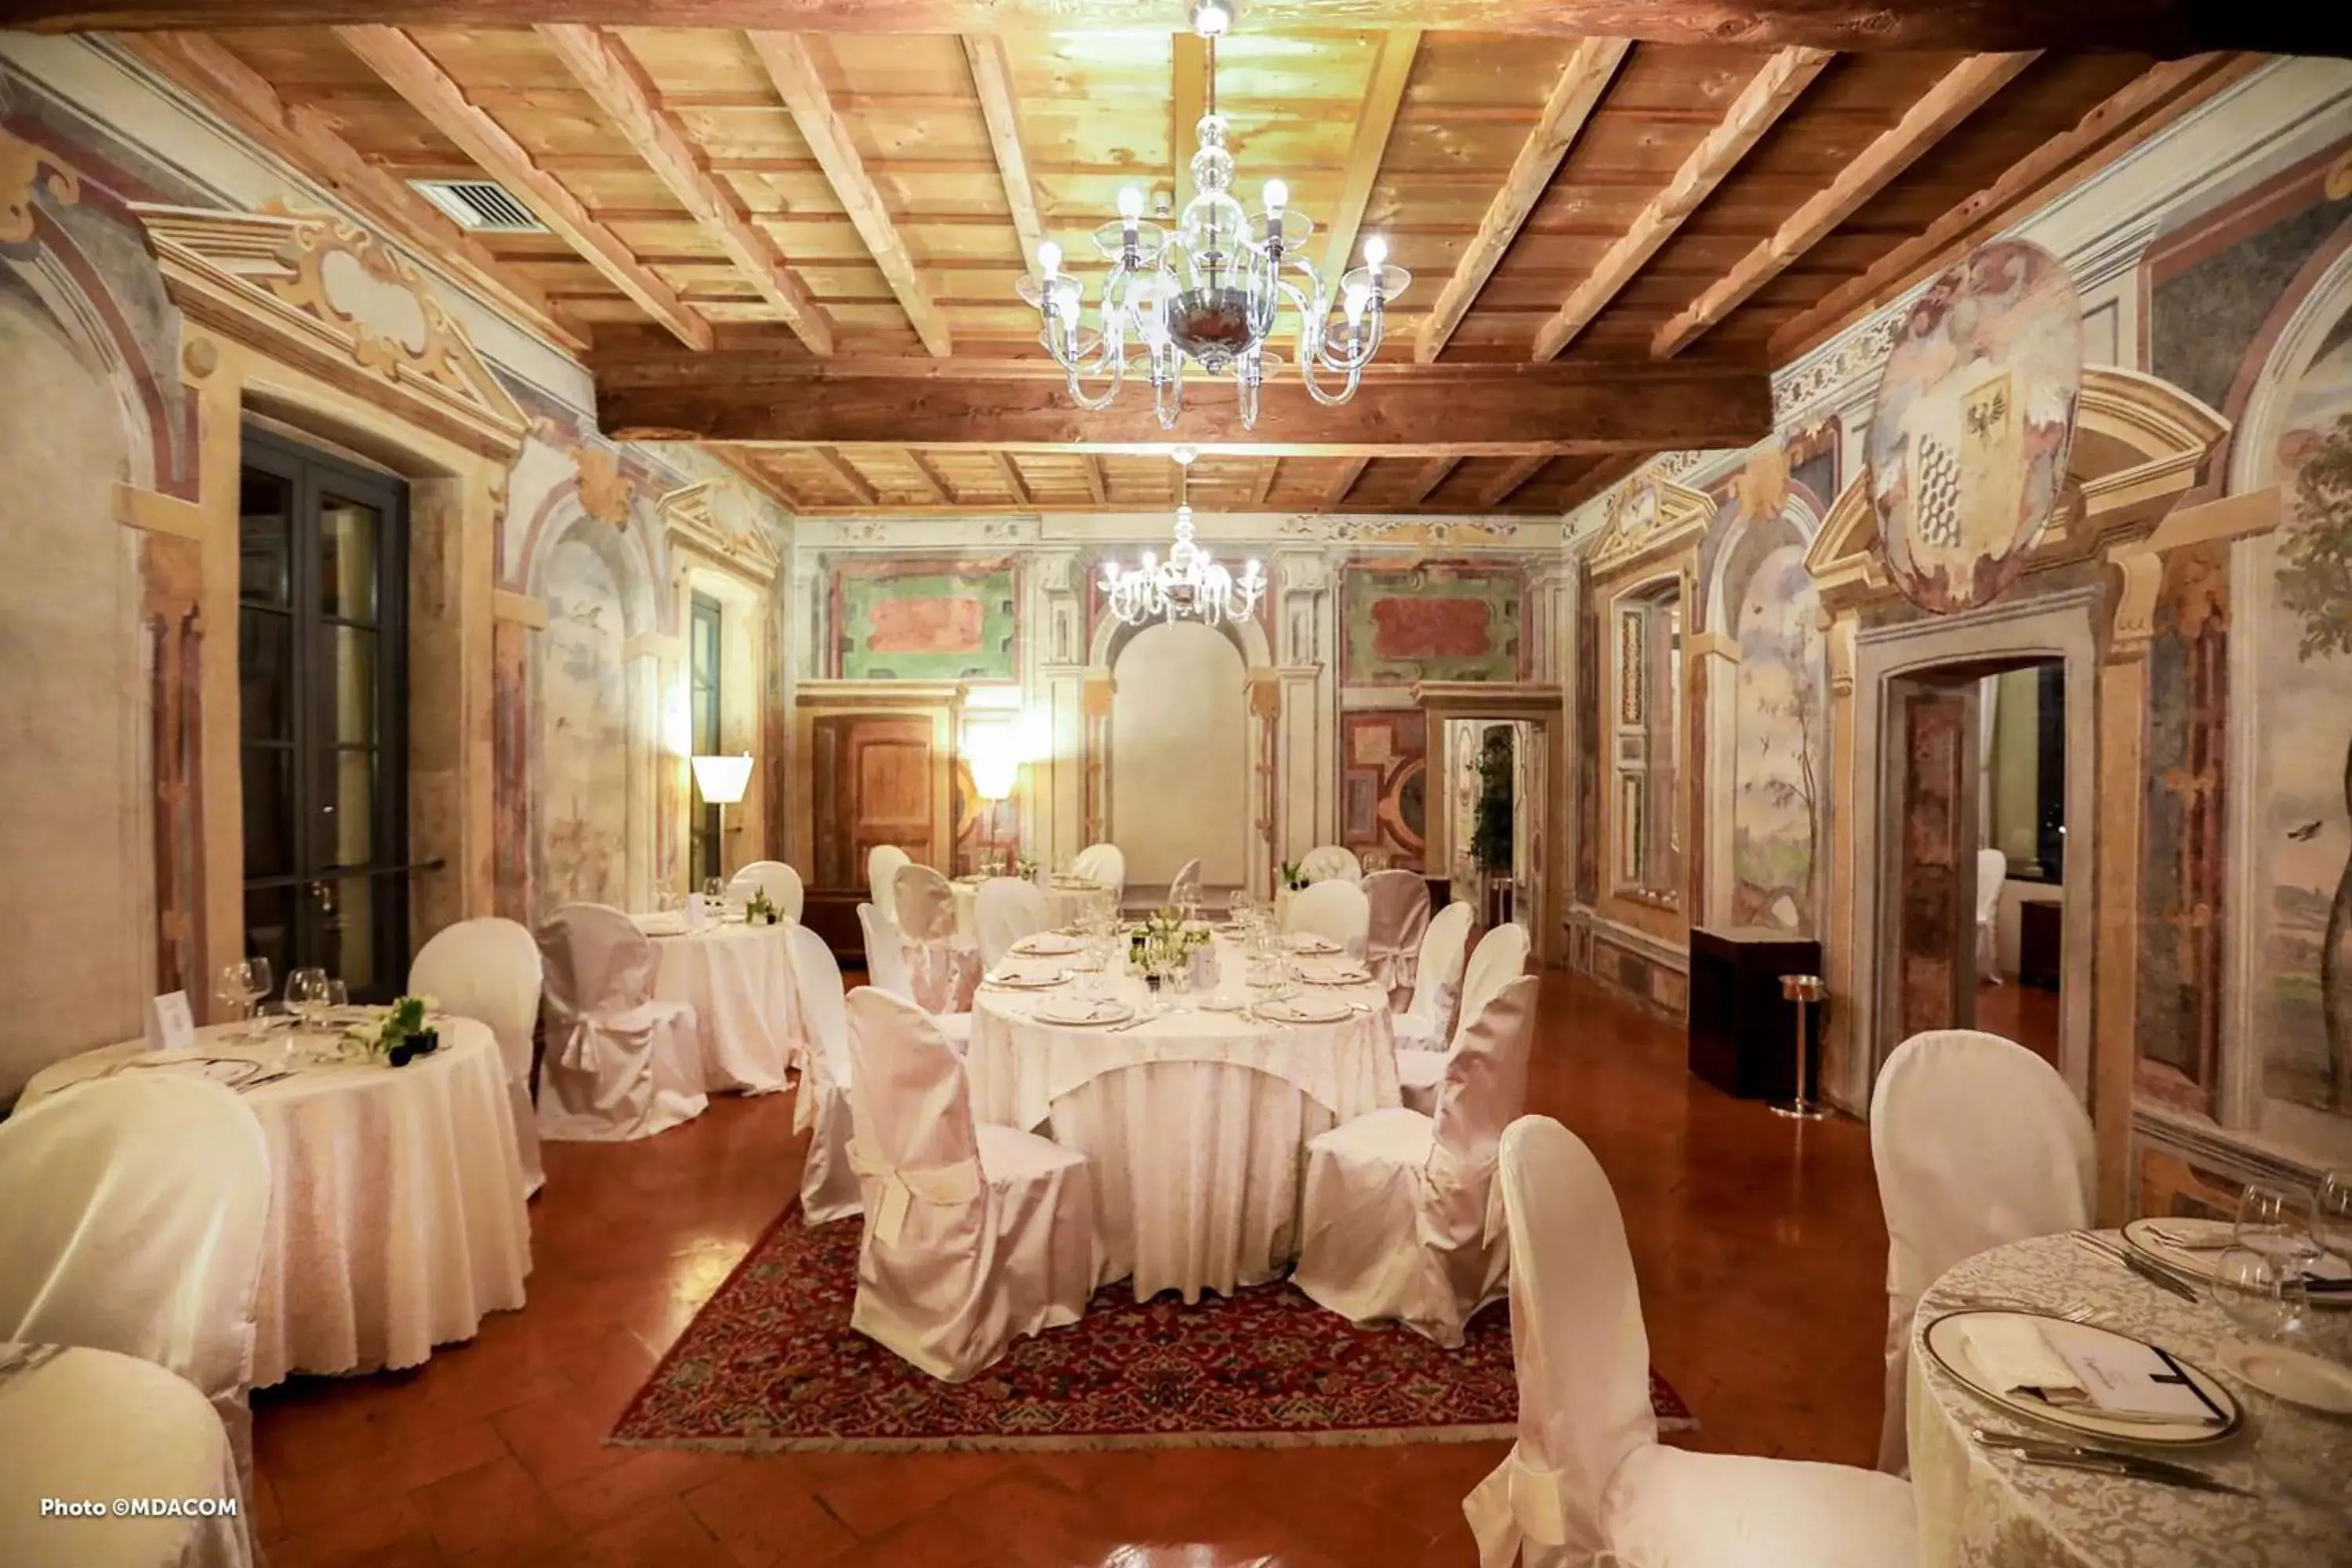 Dining area, Banquet Facilities in Grand Hotel Villa Torretta, Curio Collection by Hilton